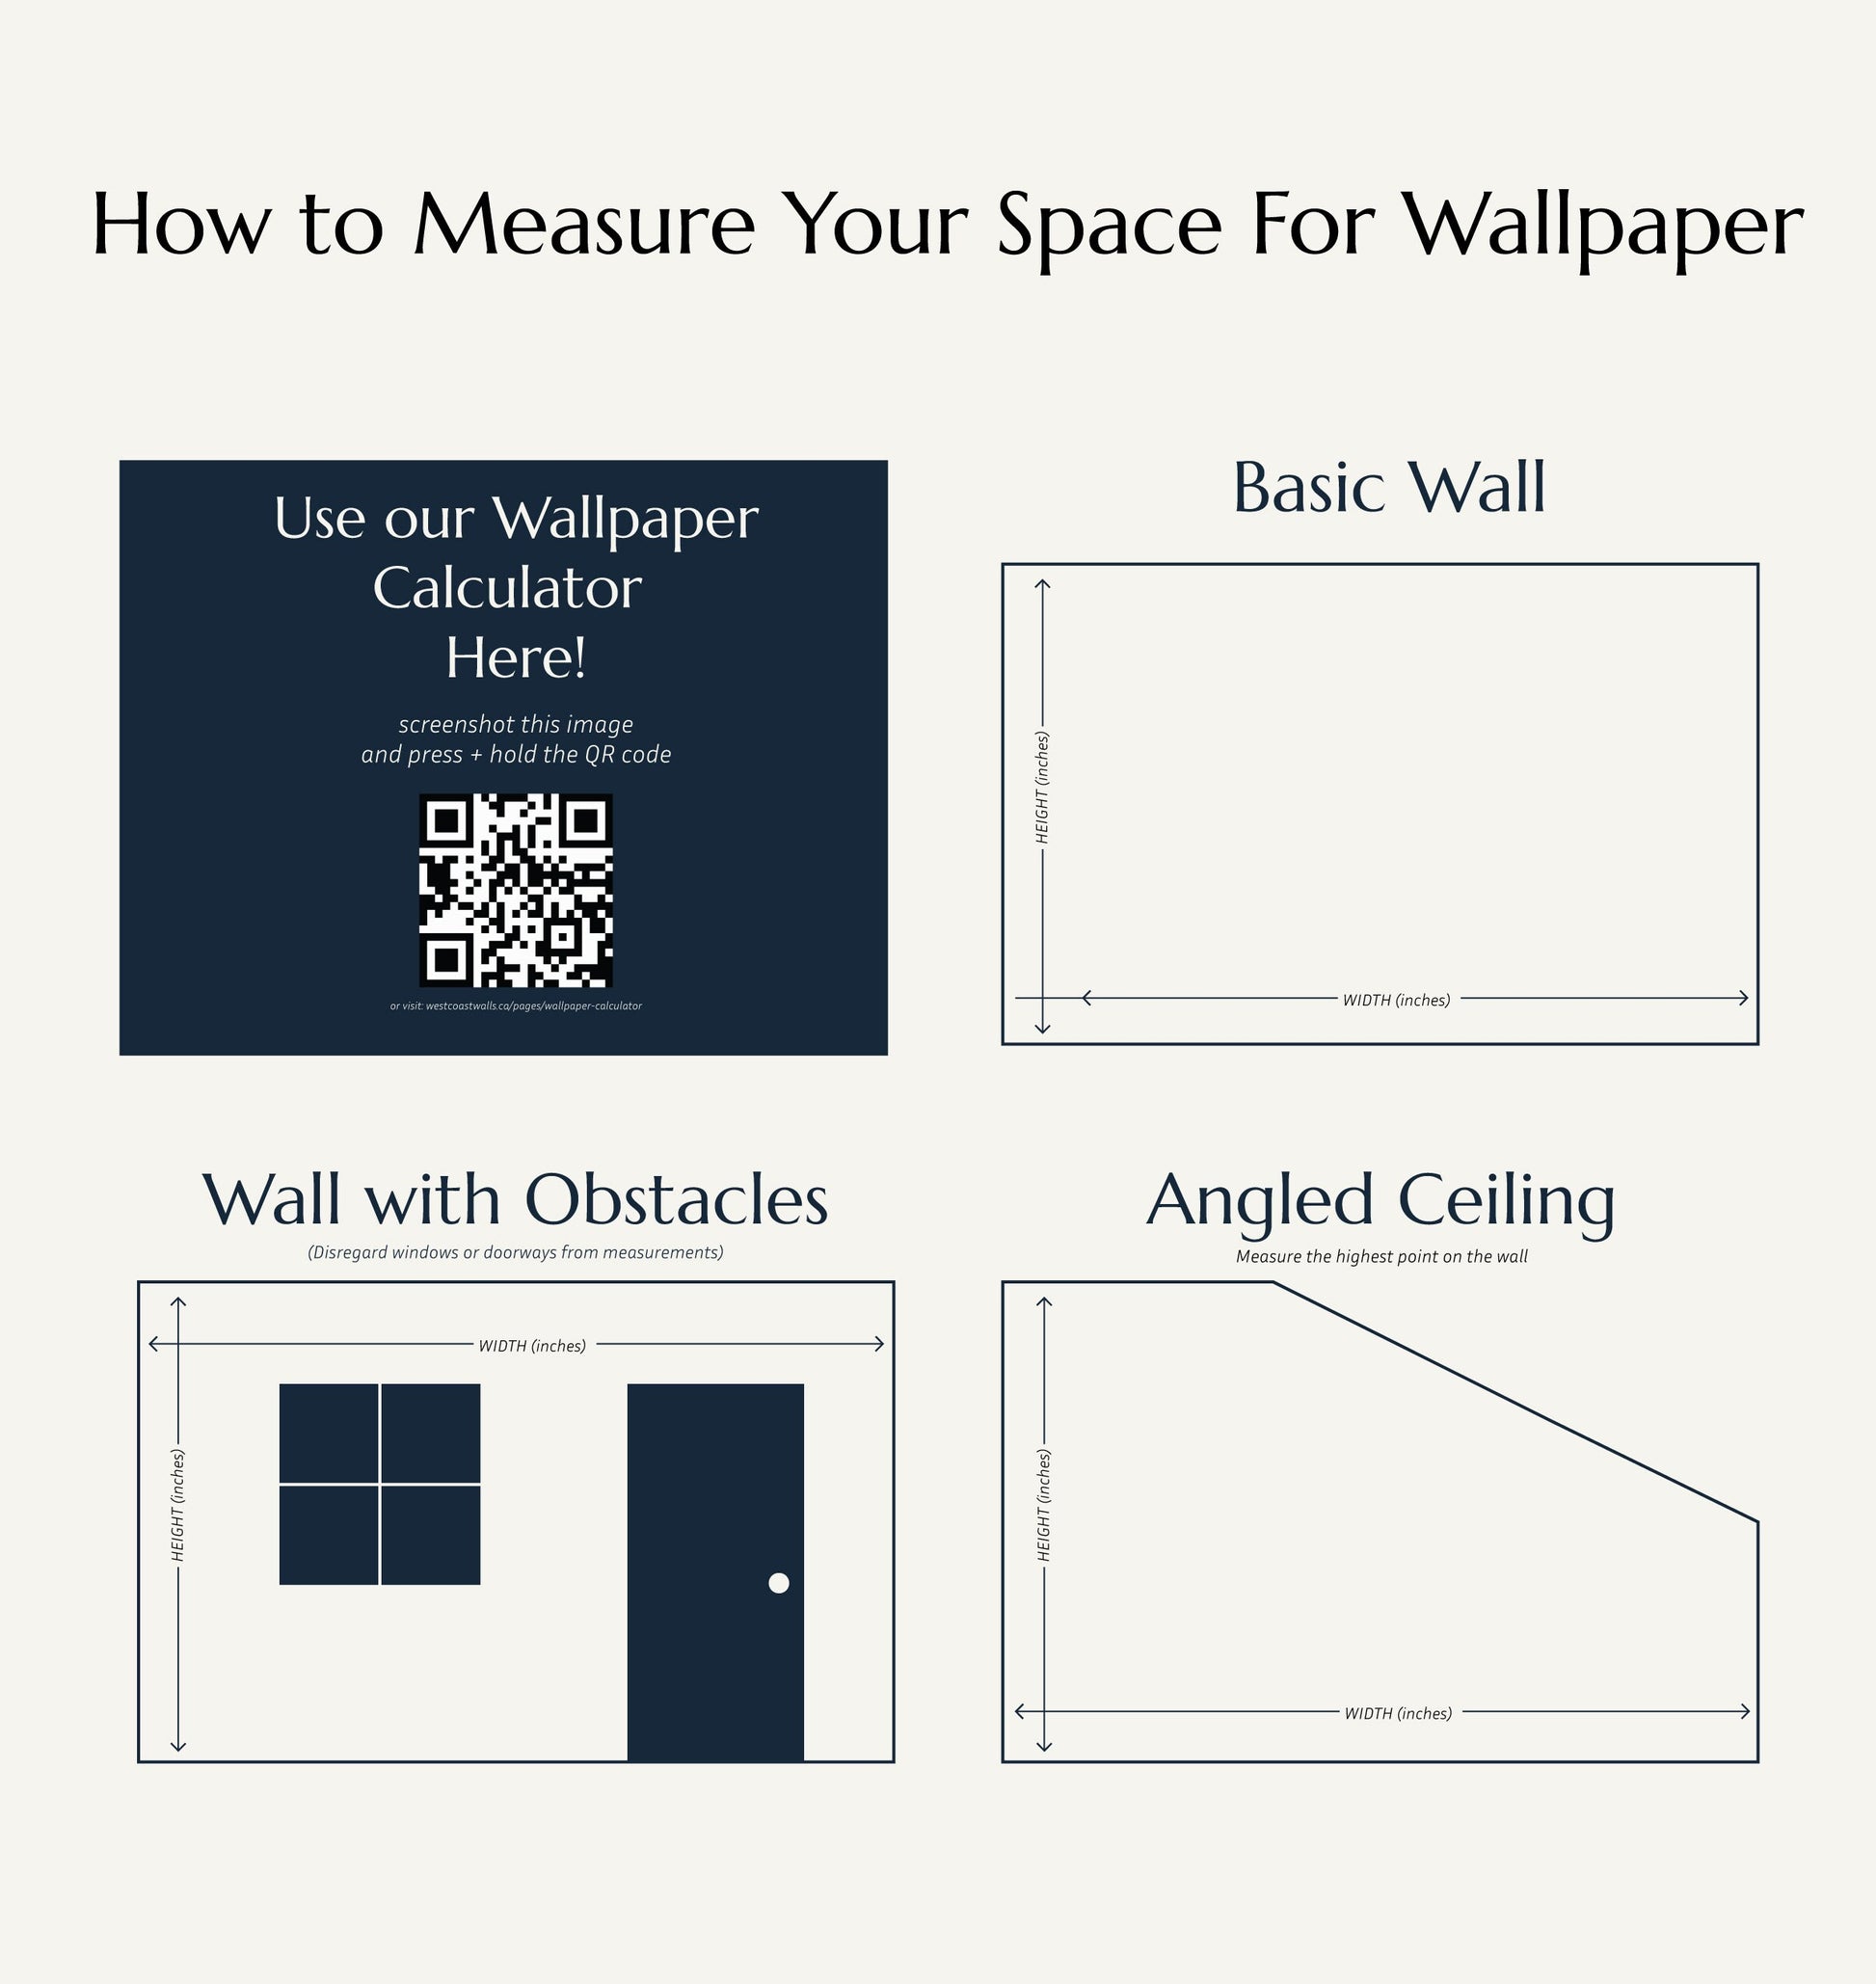 Block Print Geometric Wallpaper / Bold Wallpaper / Eclectic Style / Modern Wallpaper / Abstract Wallpaper